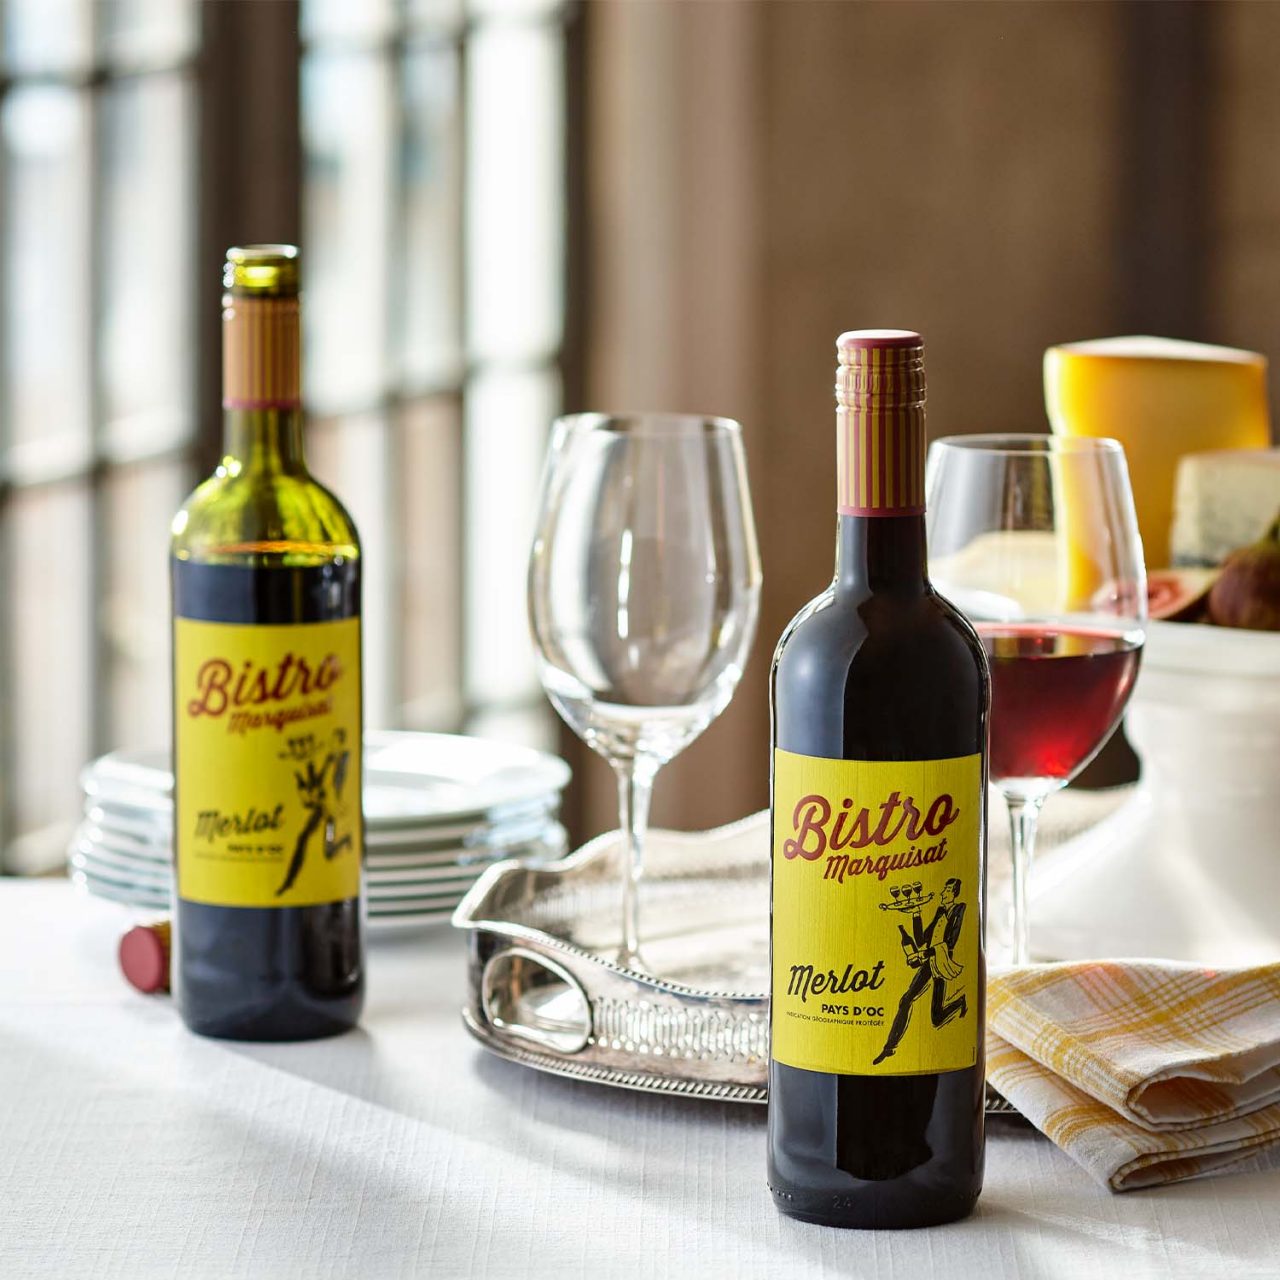 BISTRO MARQUIS - wine branding